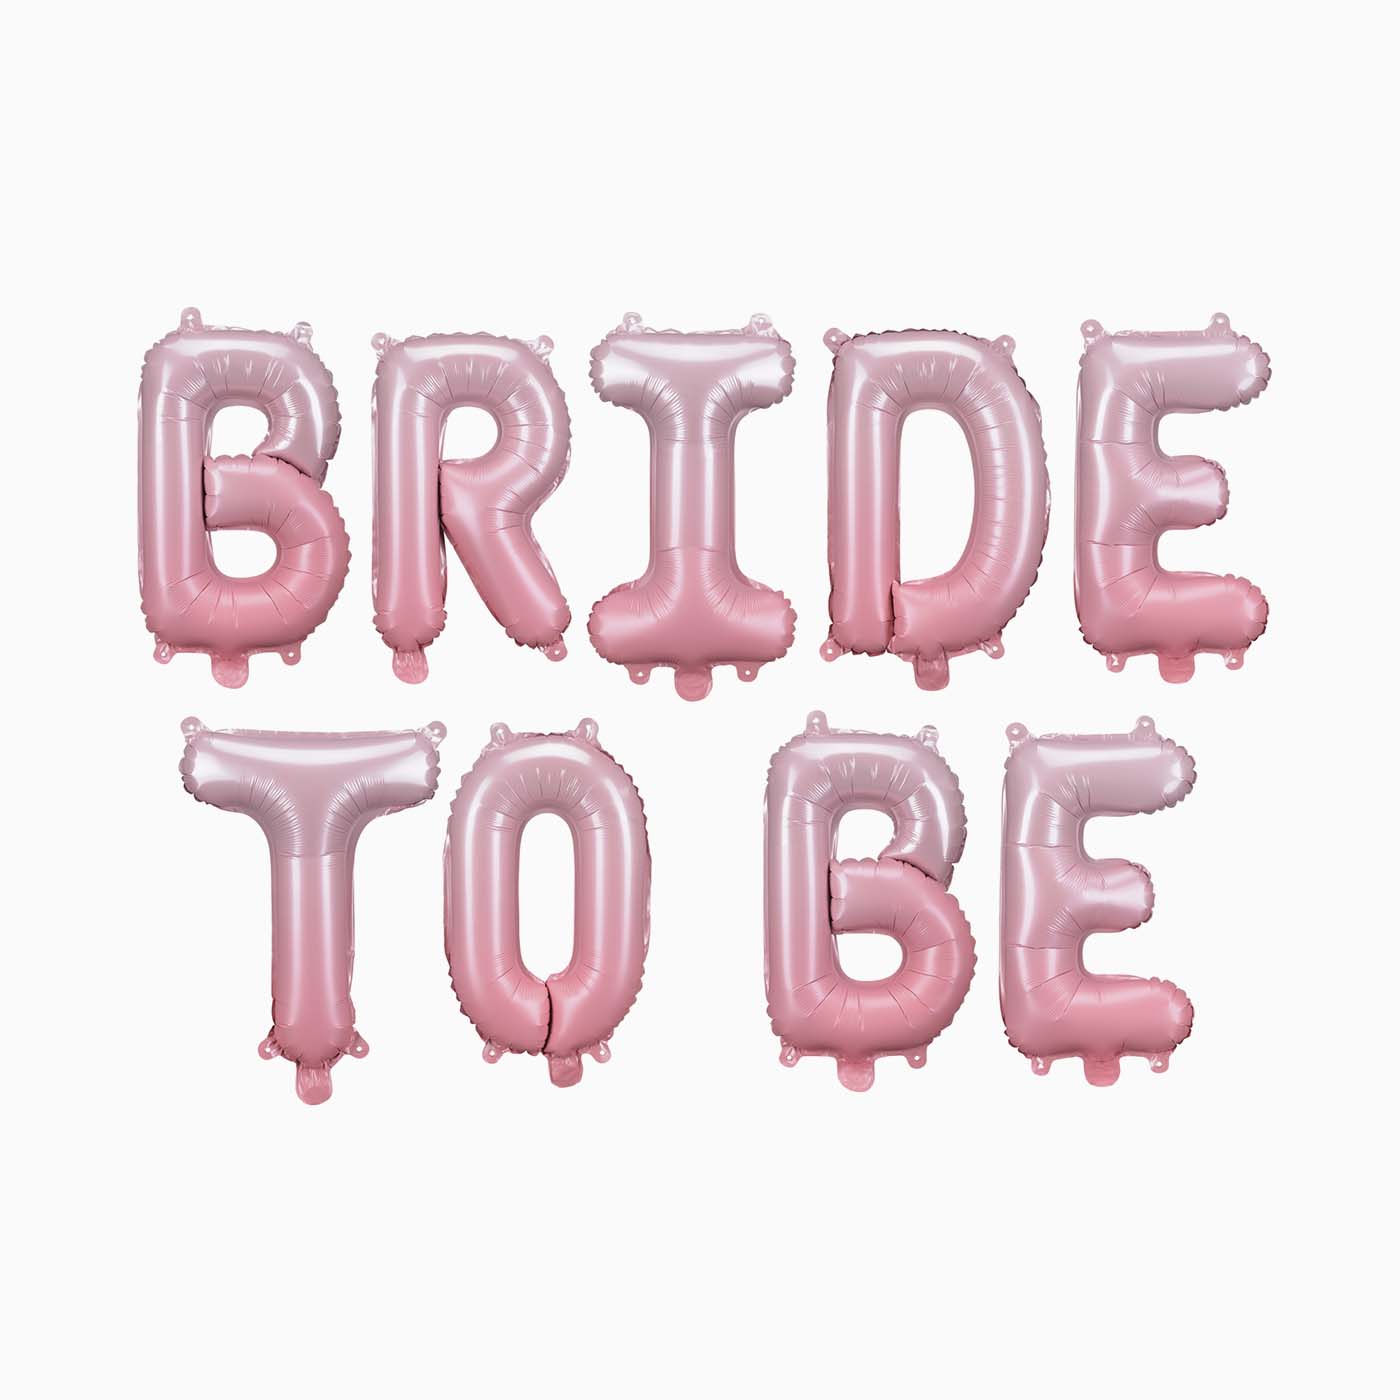 Globo Letters Foil "Bride to Be" Bachelorette Party